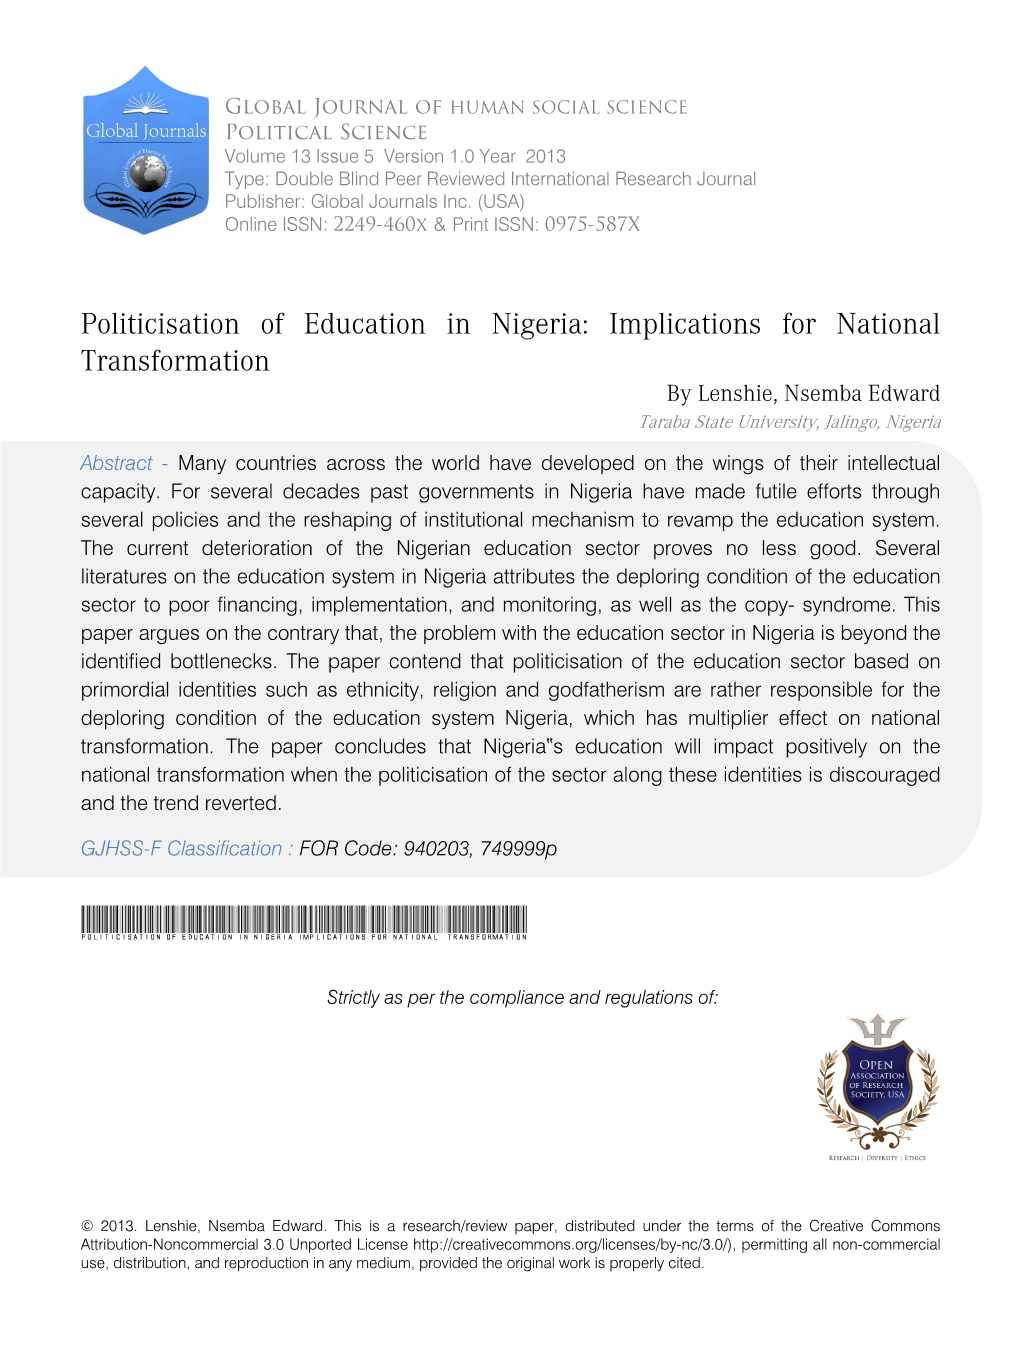 Politicisation of Education in Nigeria: Implications for National Transformation by Lenshie, Nsemba Edward Taraba State University, Jalingo, Nigeria